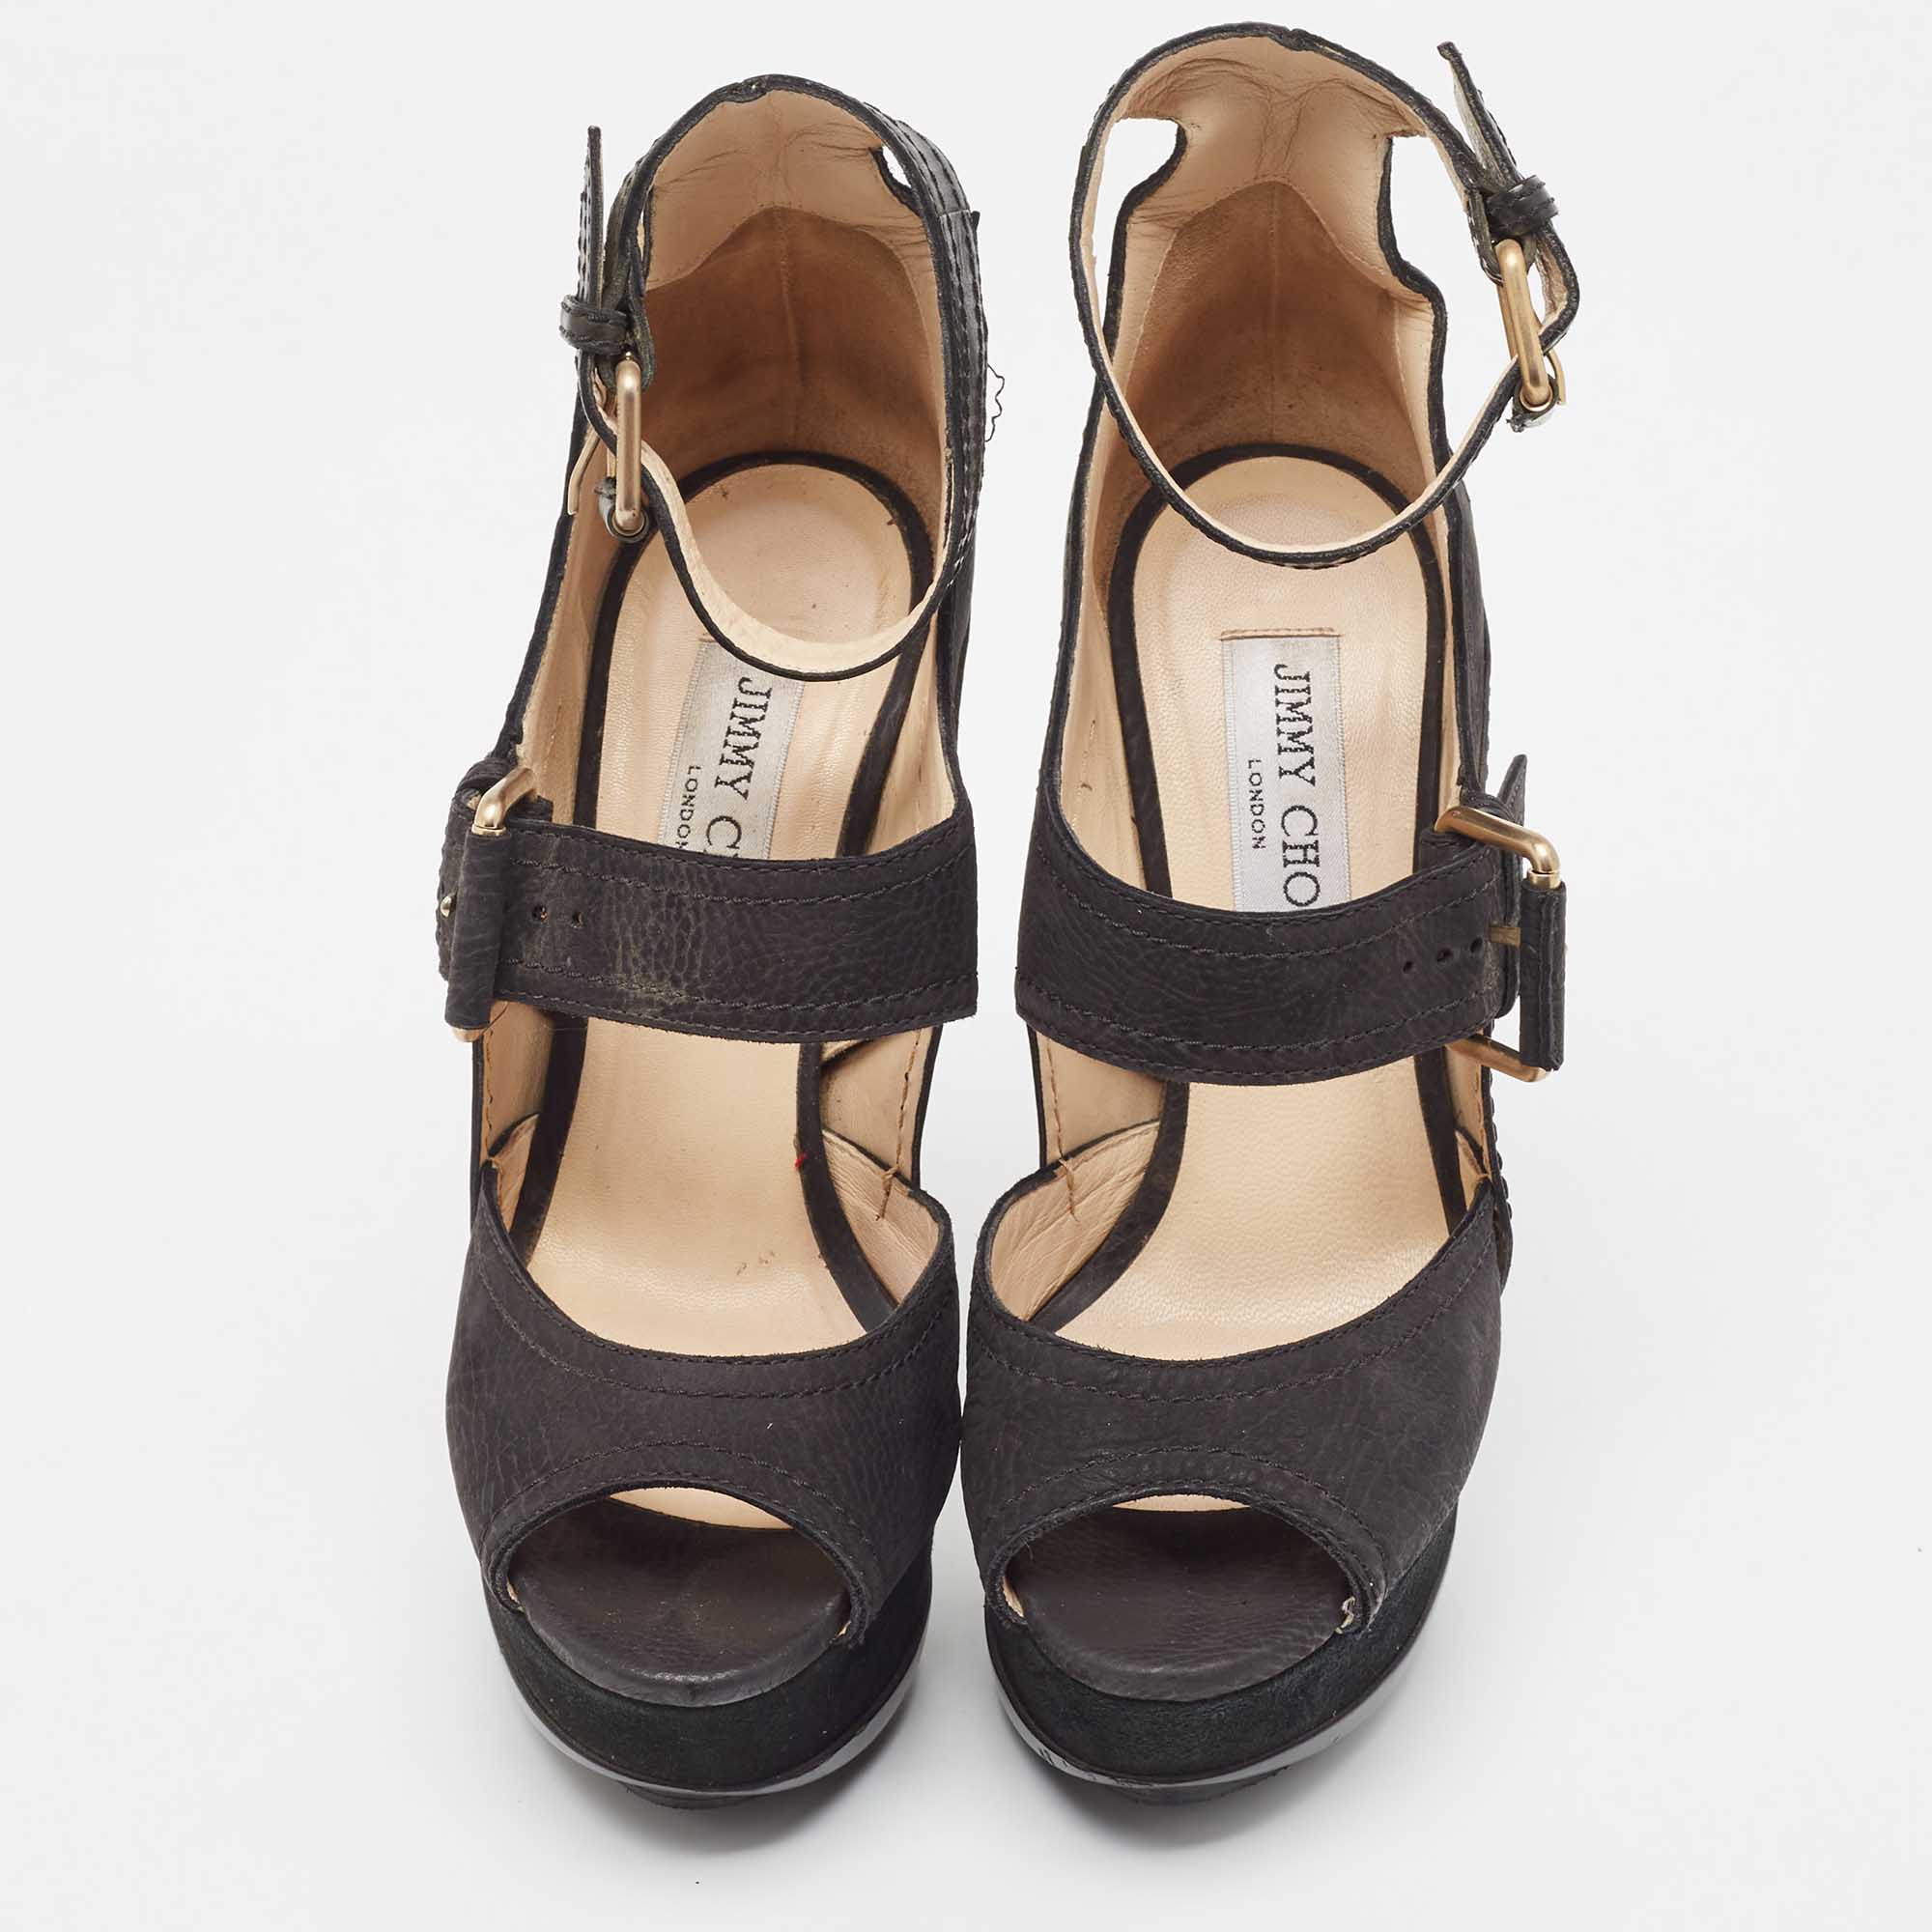 Jimmy Choo Black Nubuck Leather Ankle Strap Sandals Size 36.5